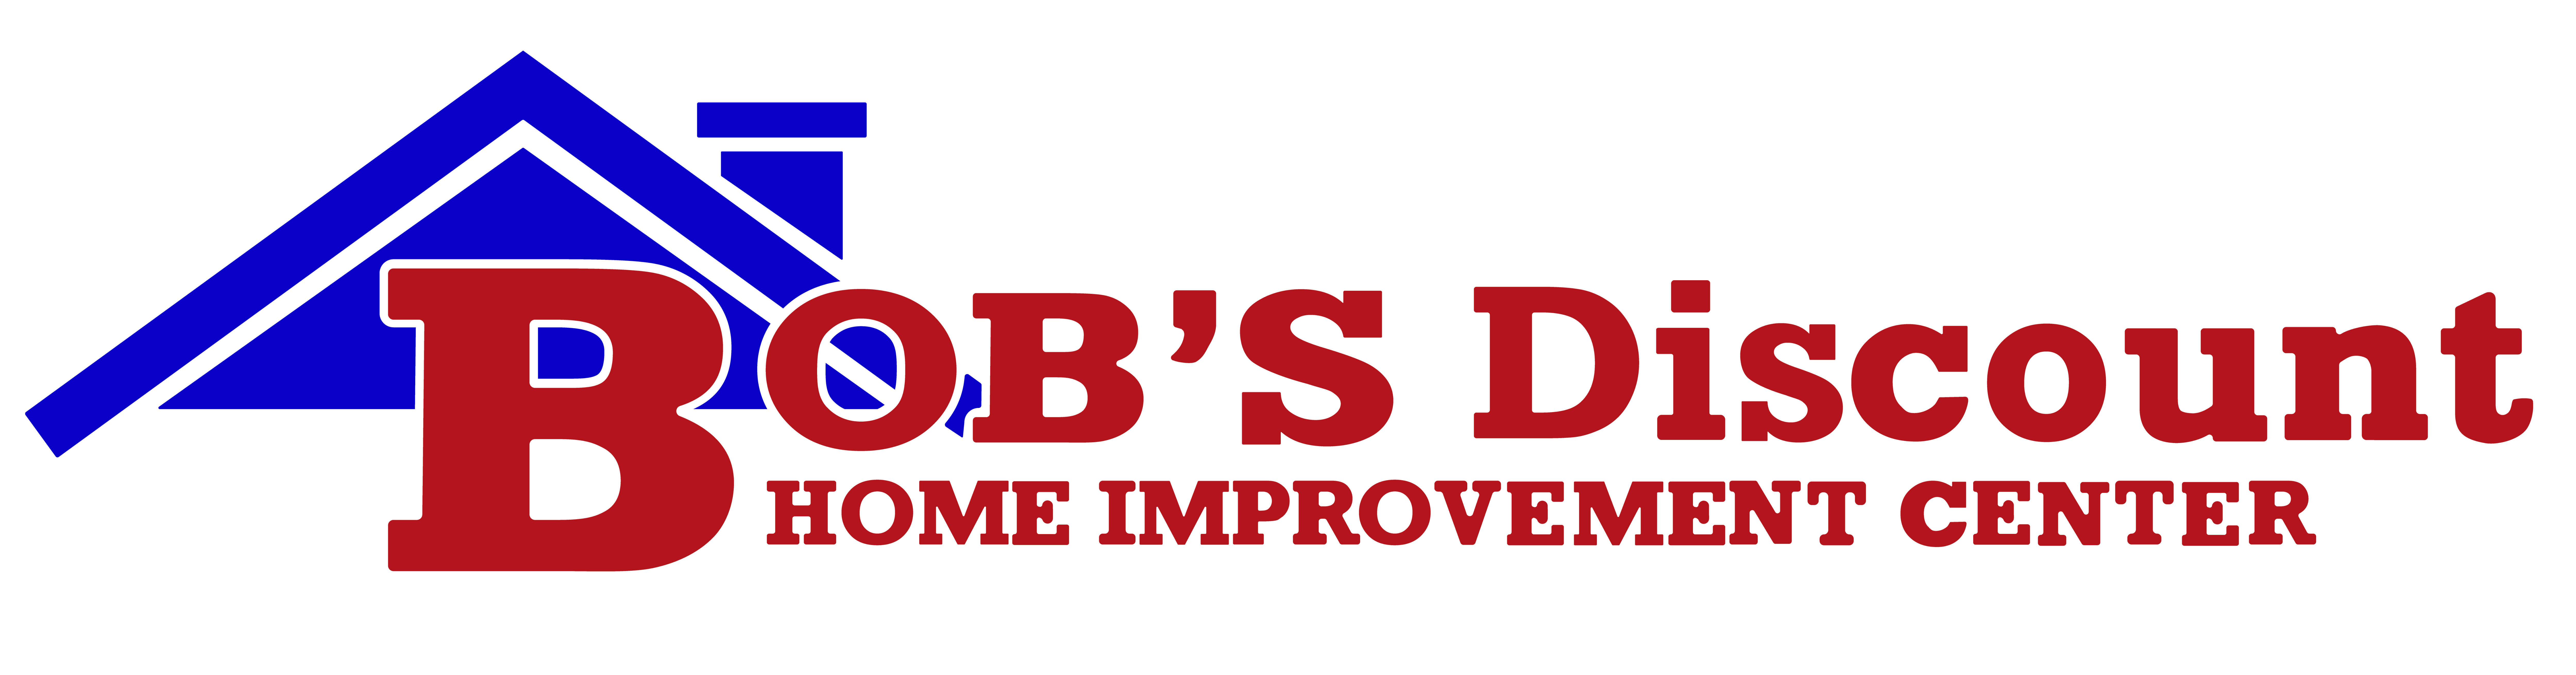 Bob's Discount Home Improvement - Effingham Illinois 62401